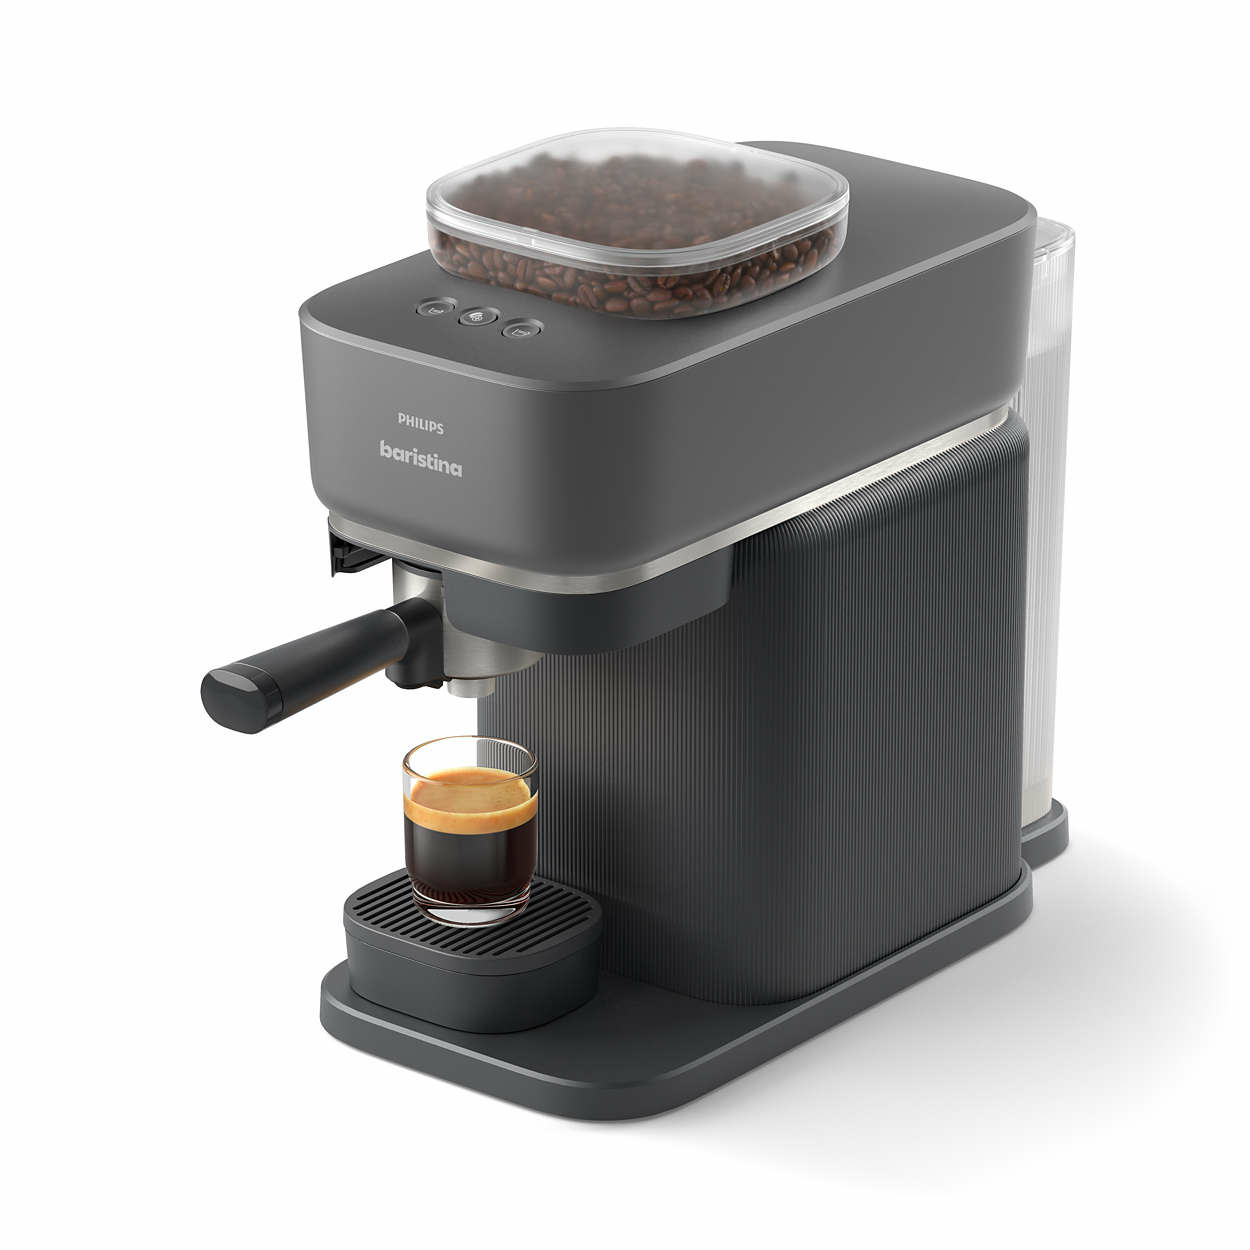 Philips BAR300/60 coffee maker